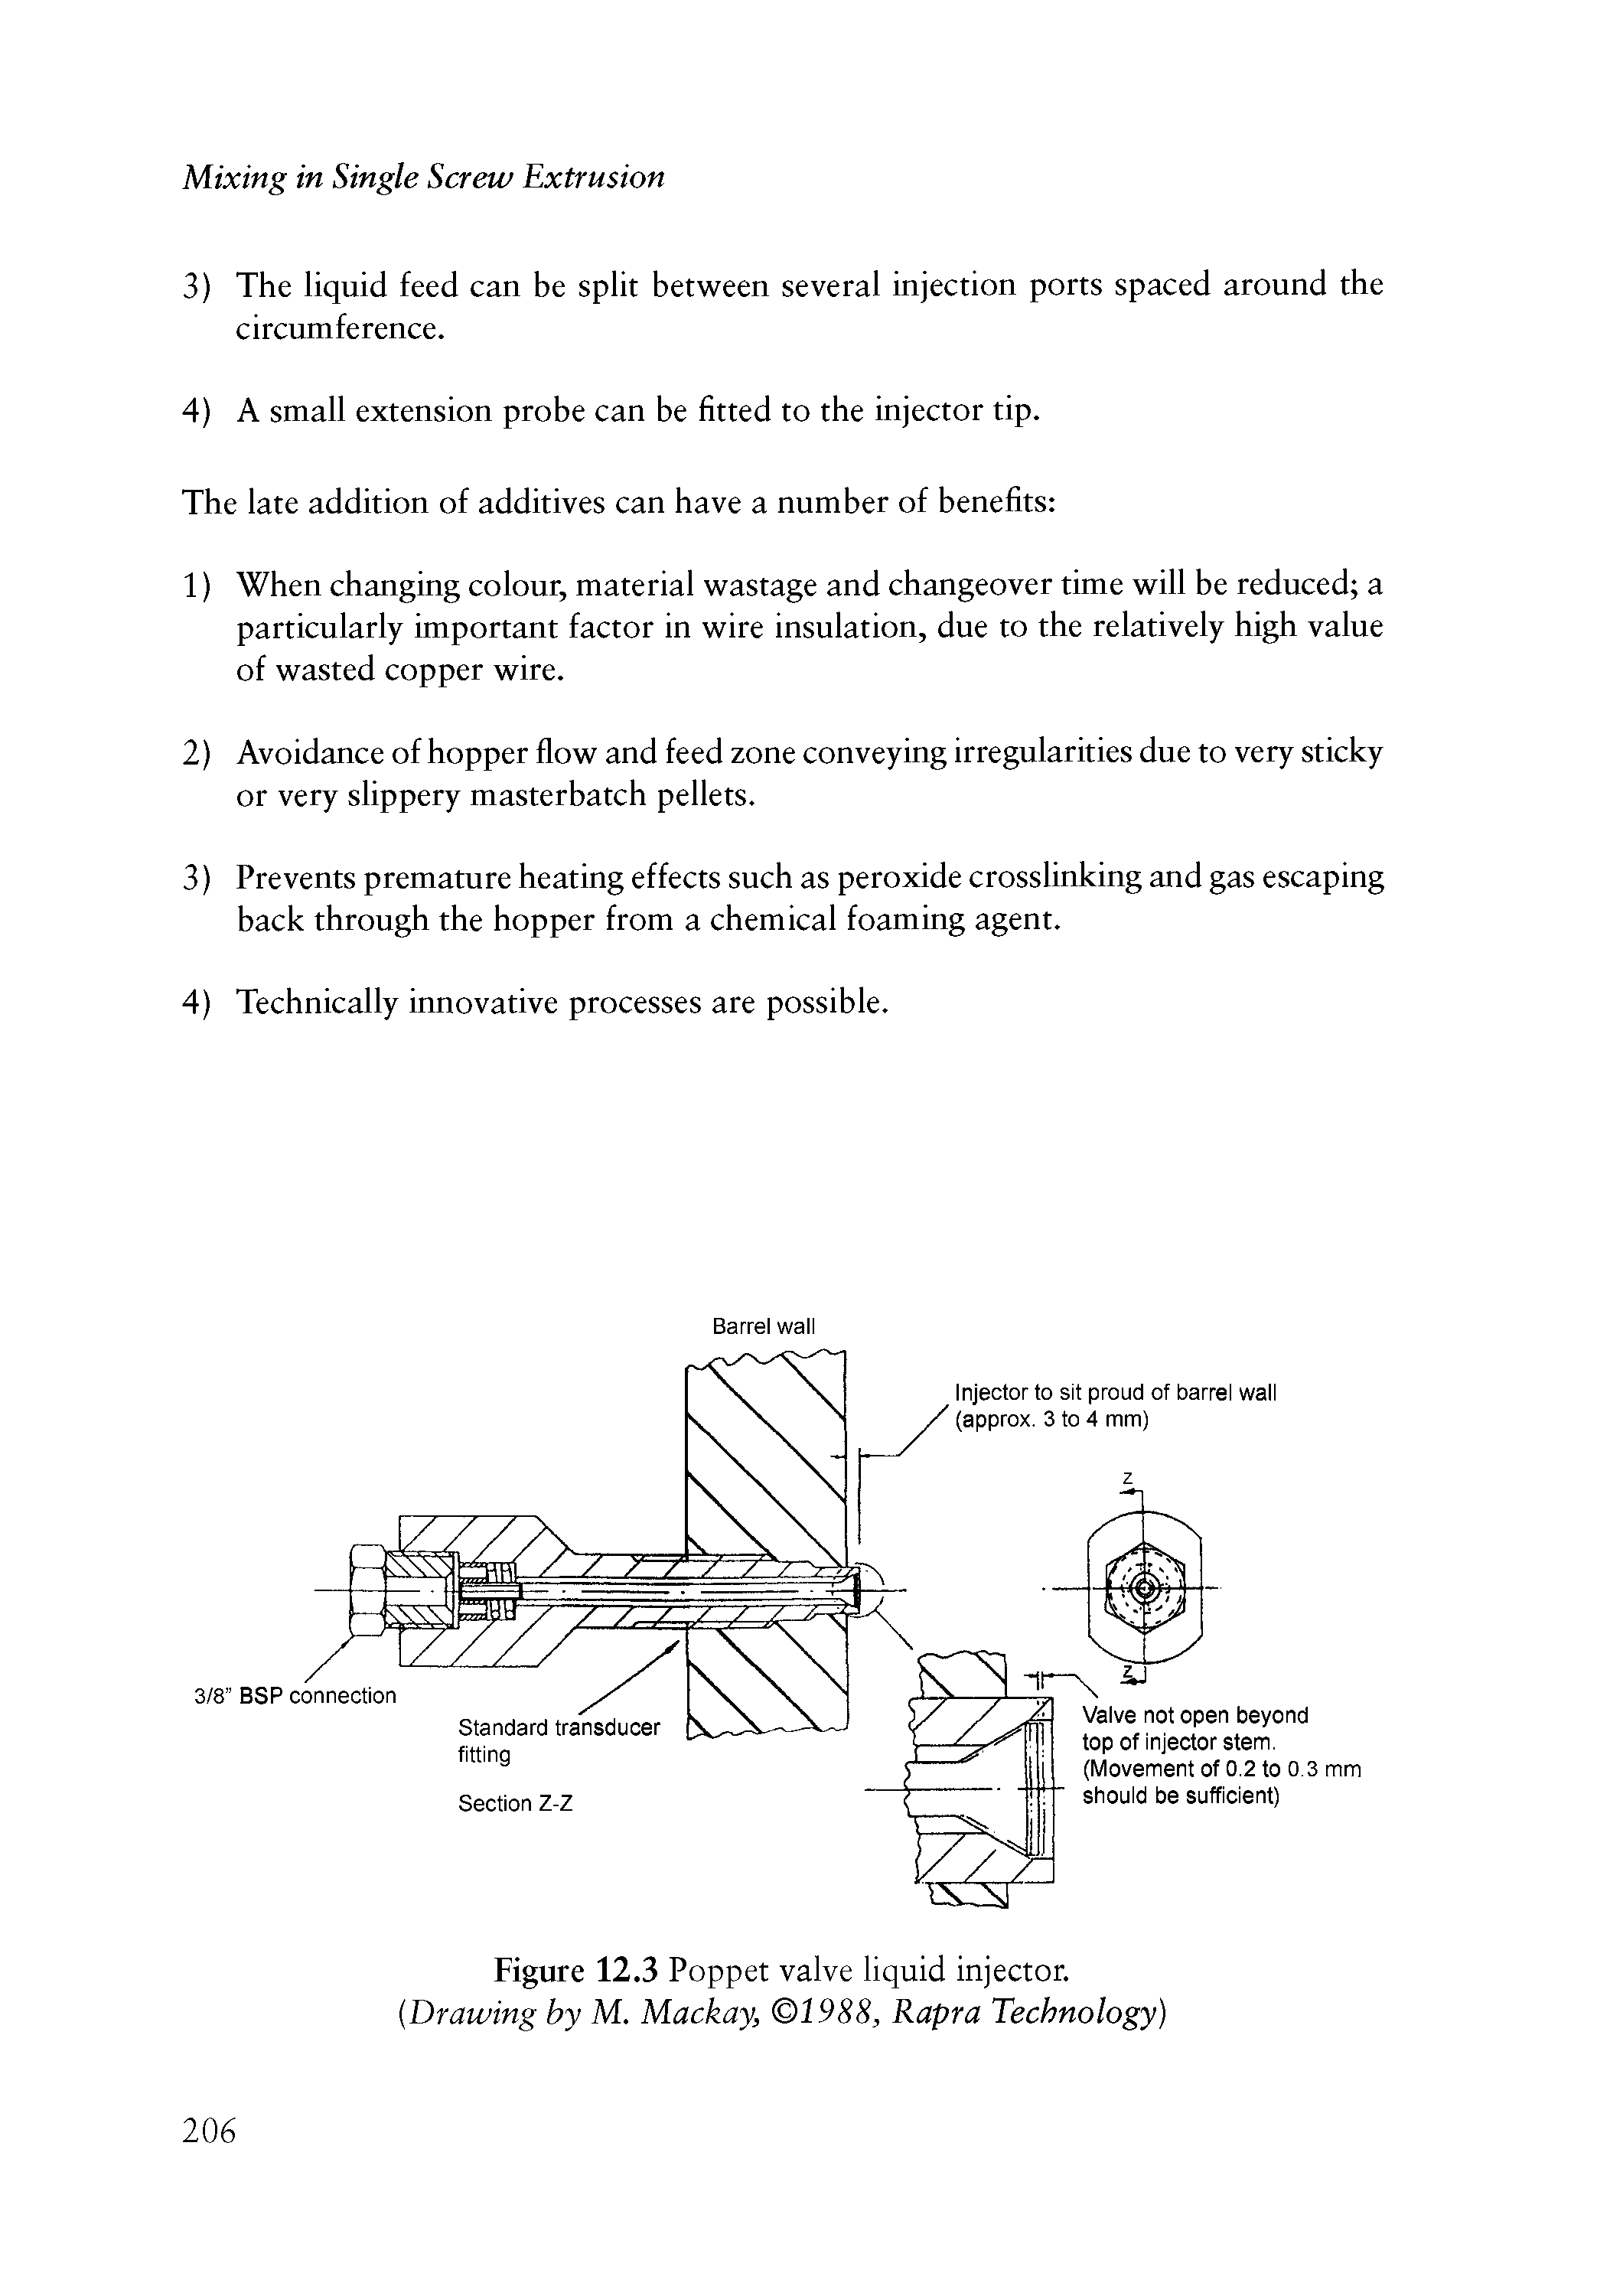 Figure 12.3 Poppet valve liquid injector. Drawing by M. Mackay, 1988, Rapra Technology)...